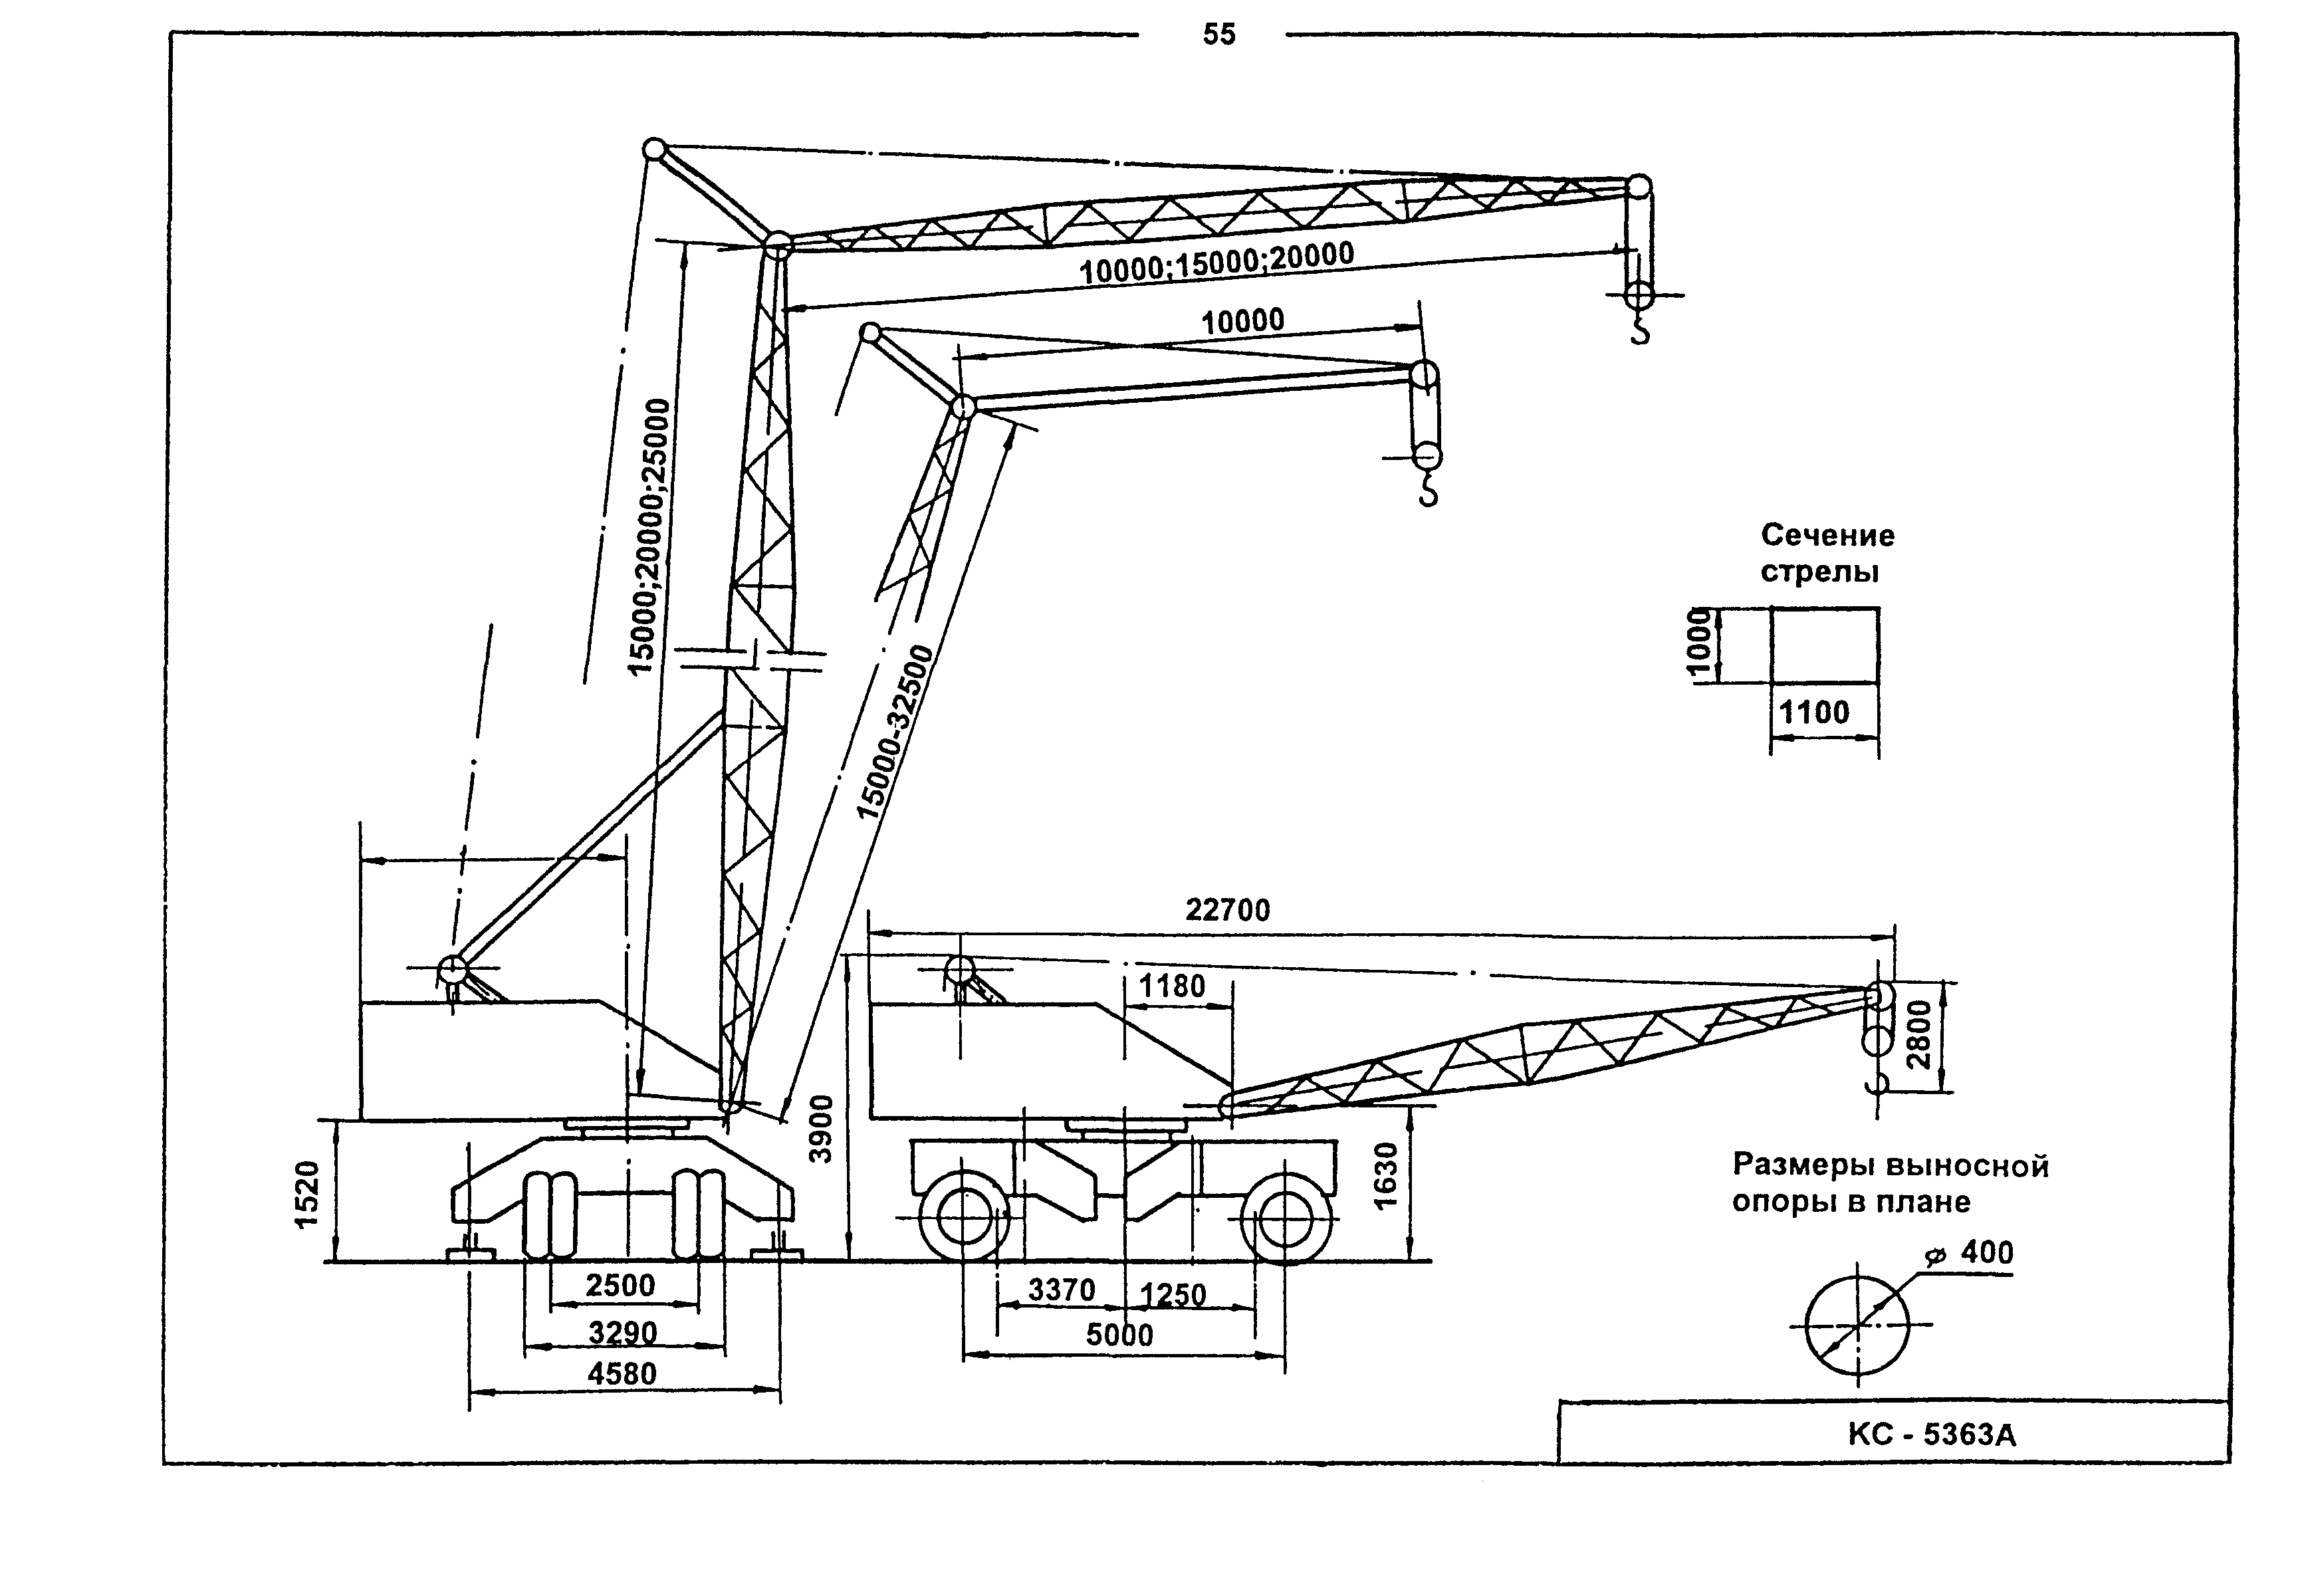 Обзор стрелового крана кс-5363